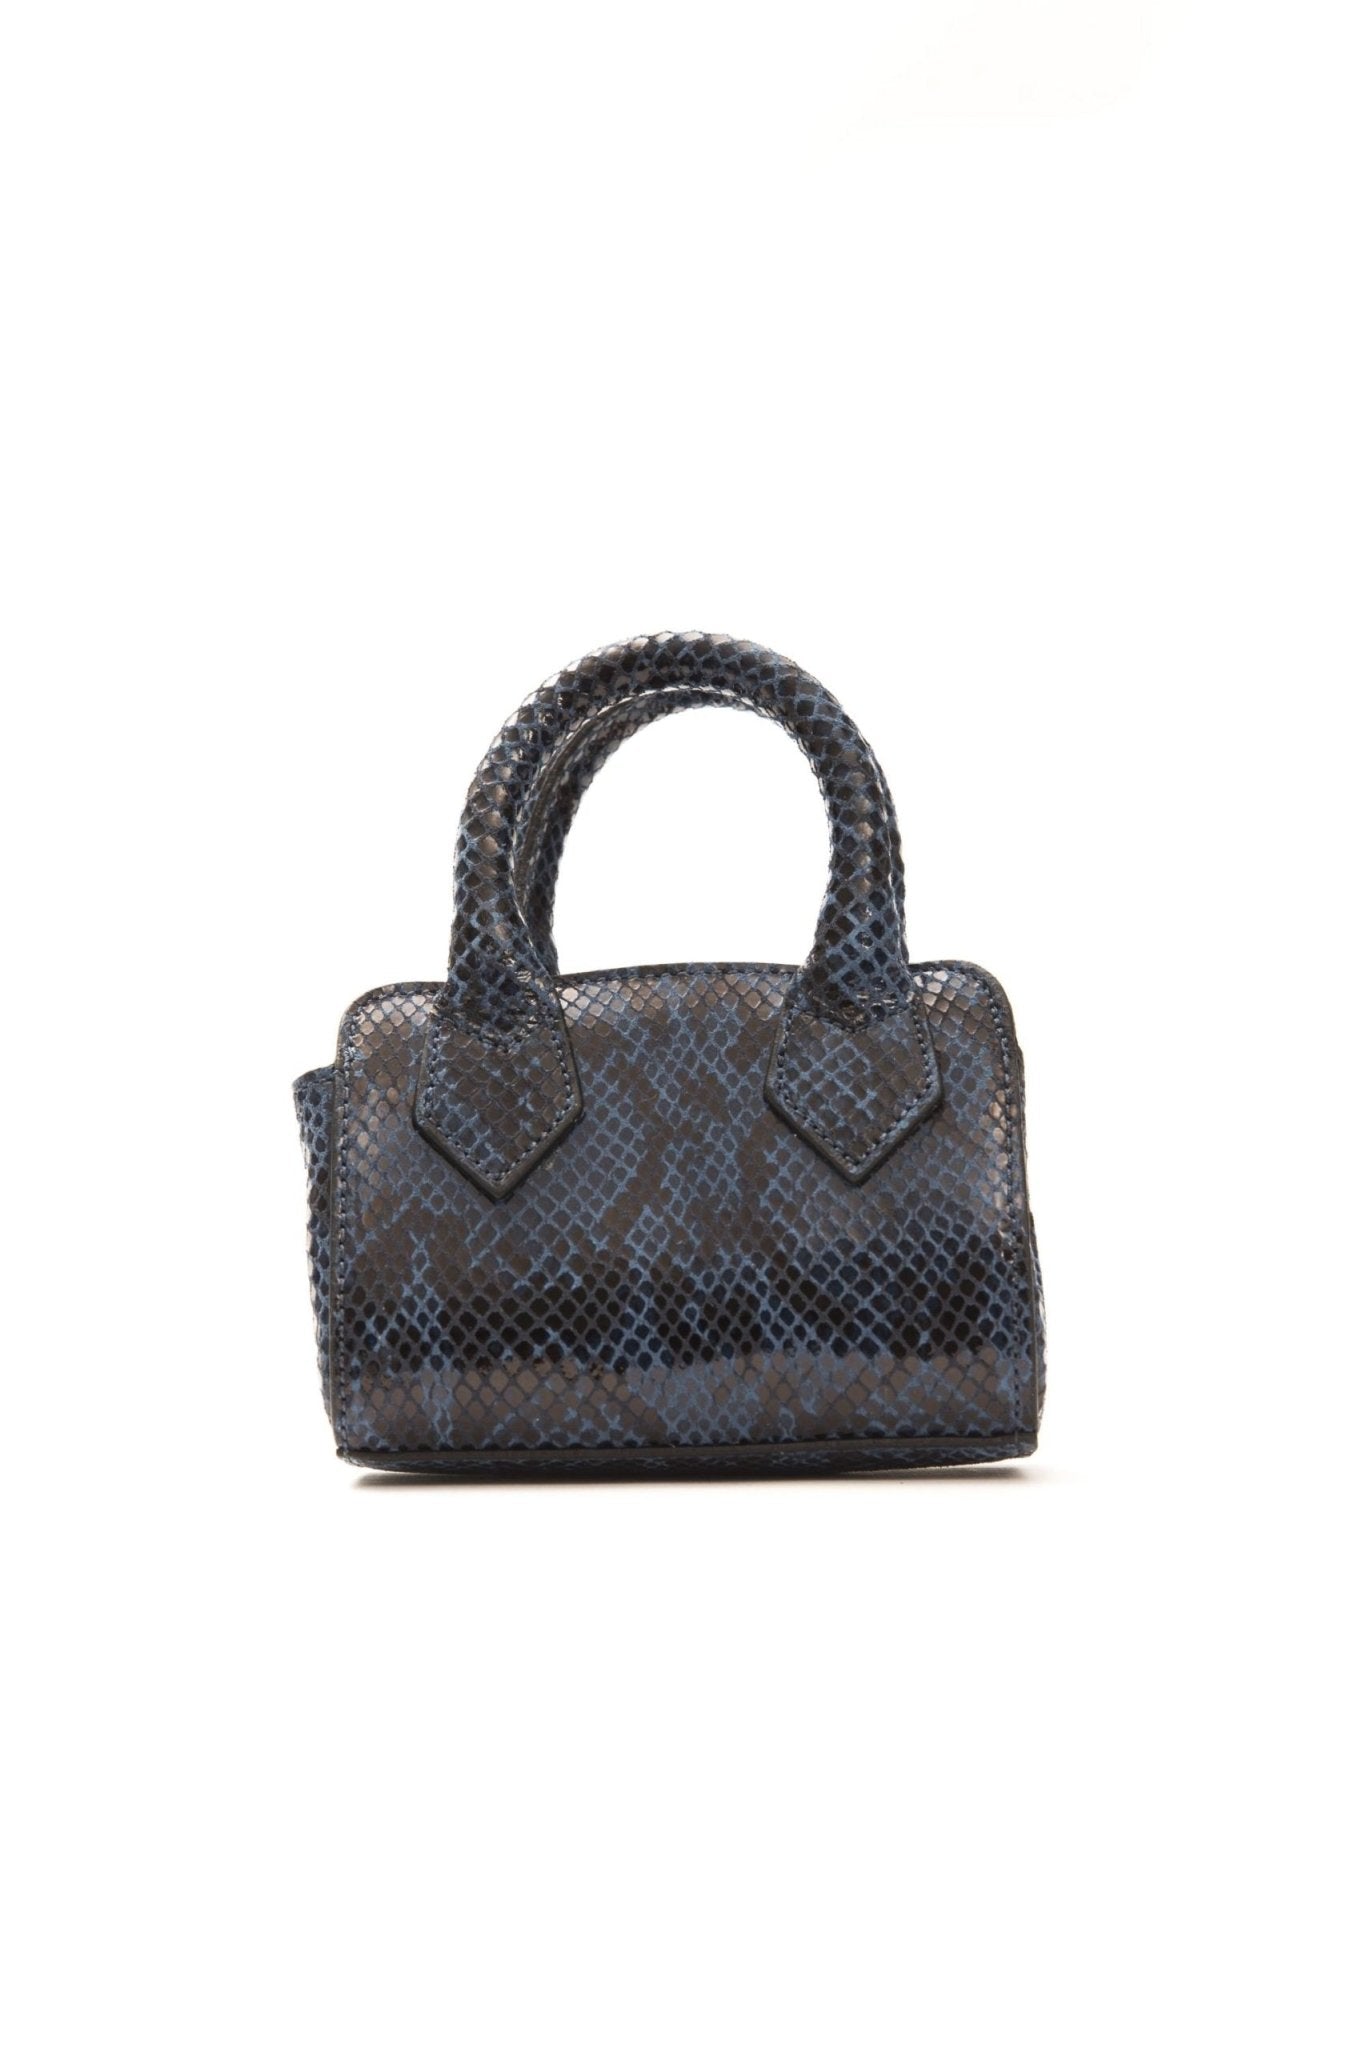 Pompei Donatella Blue Leather Handbag - Fizigo